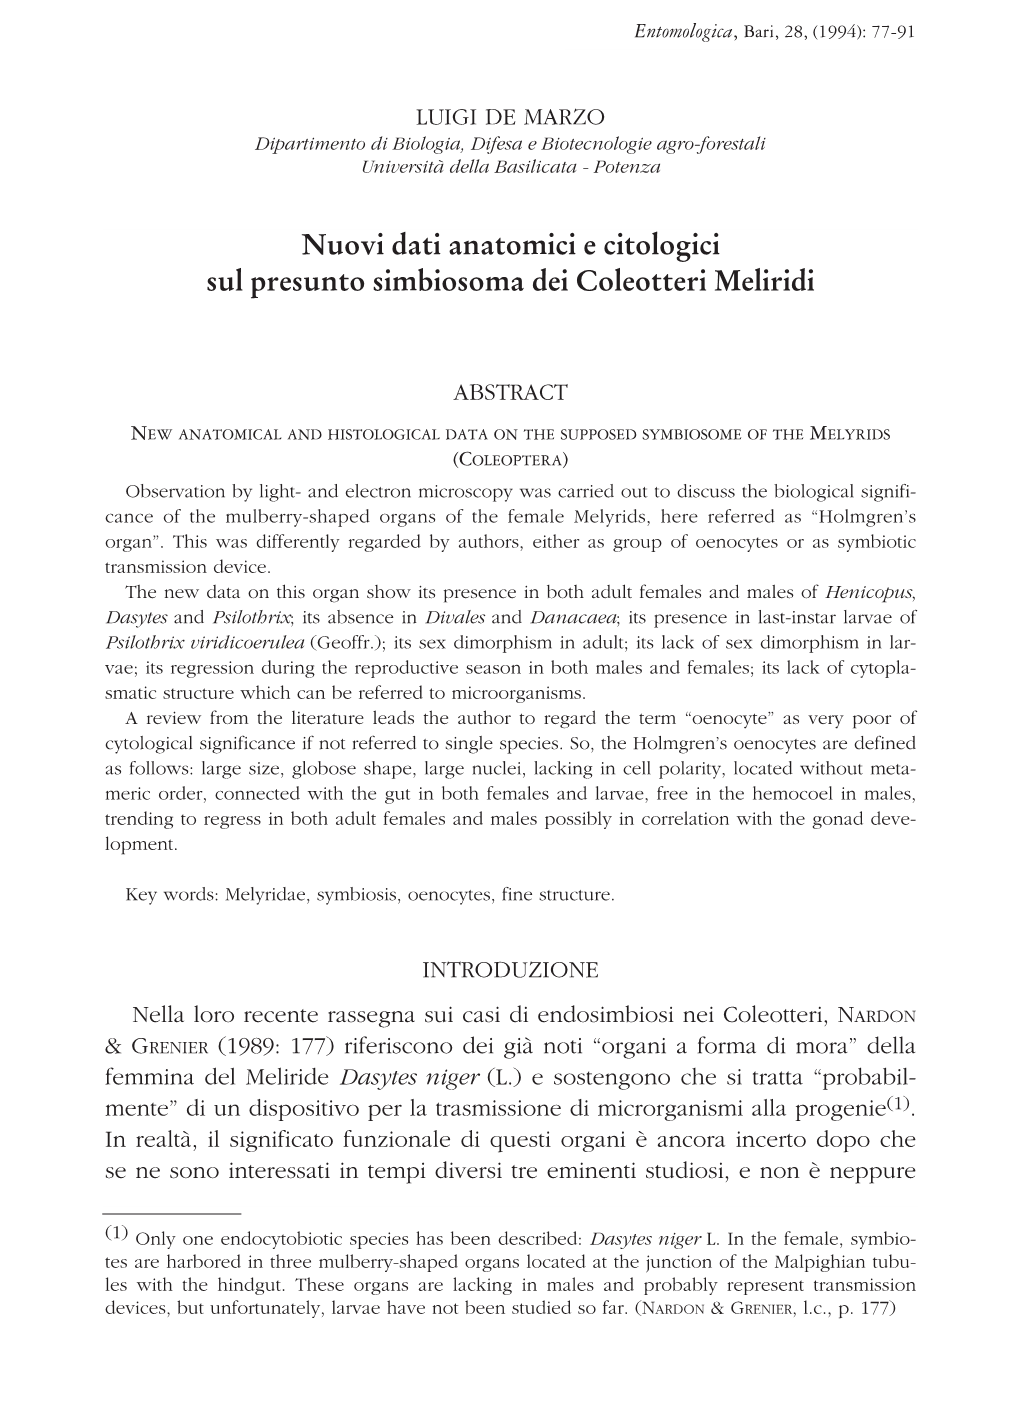 Nuovi Dati Anatomici E Citologici Sul Presunto Simbiosoma Dei Coleotteri Meliridi